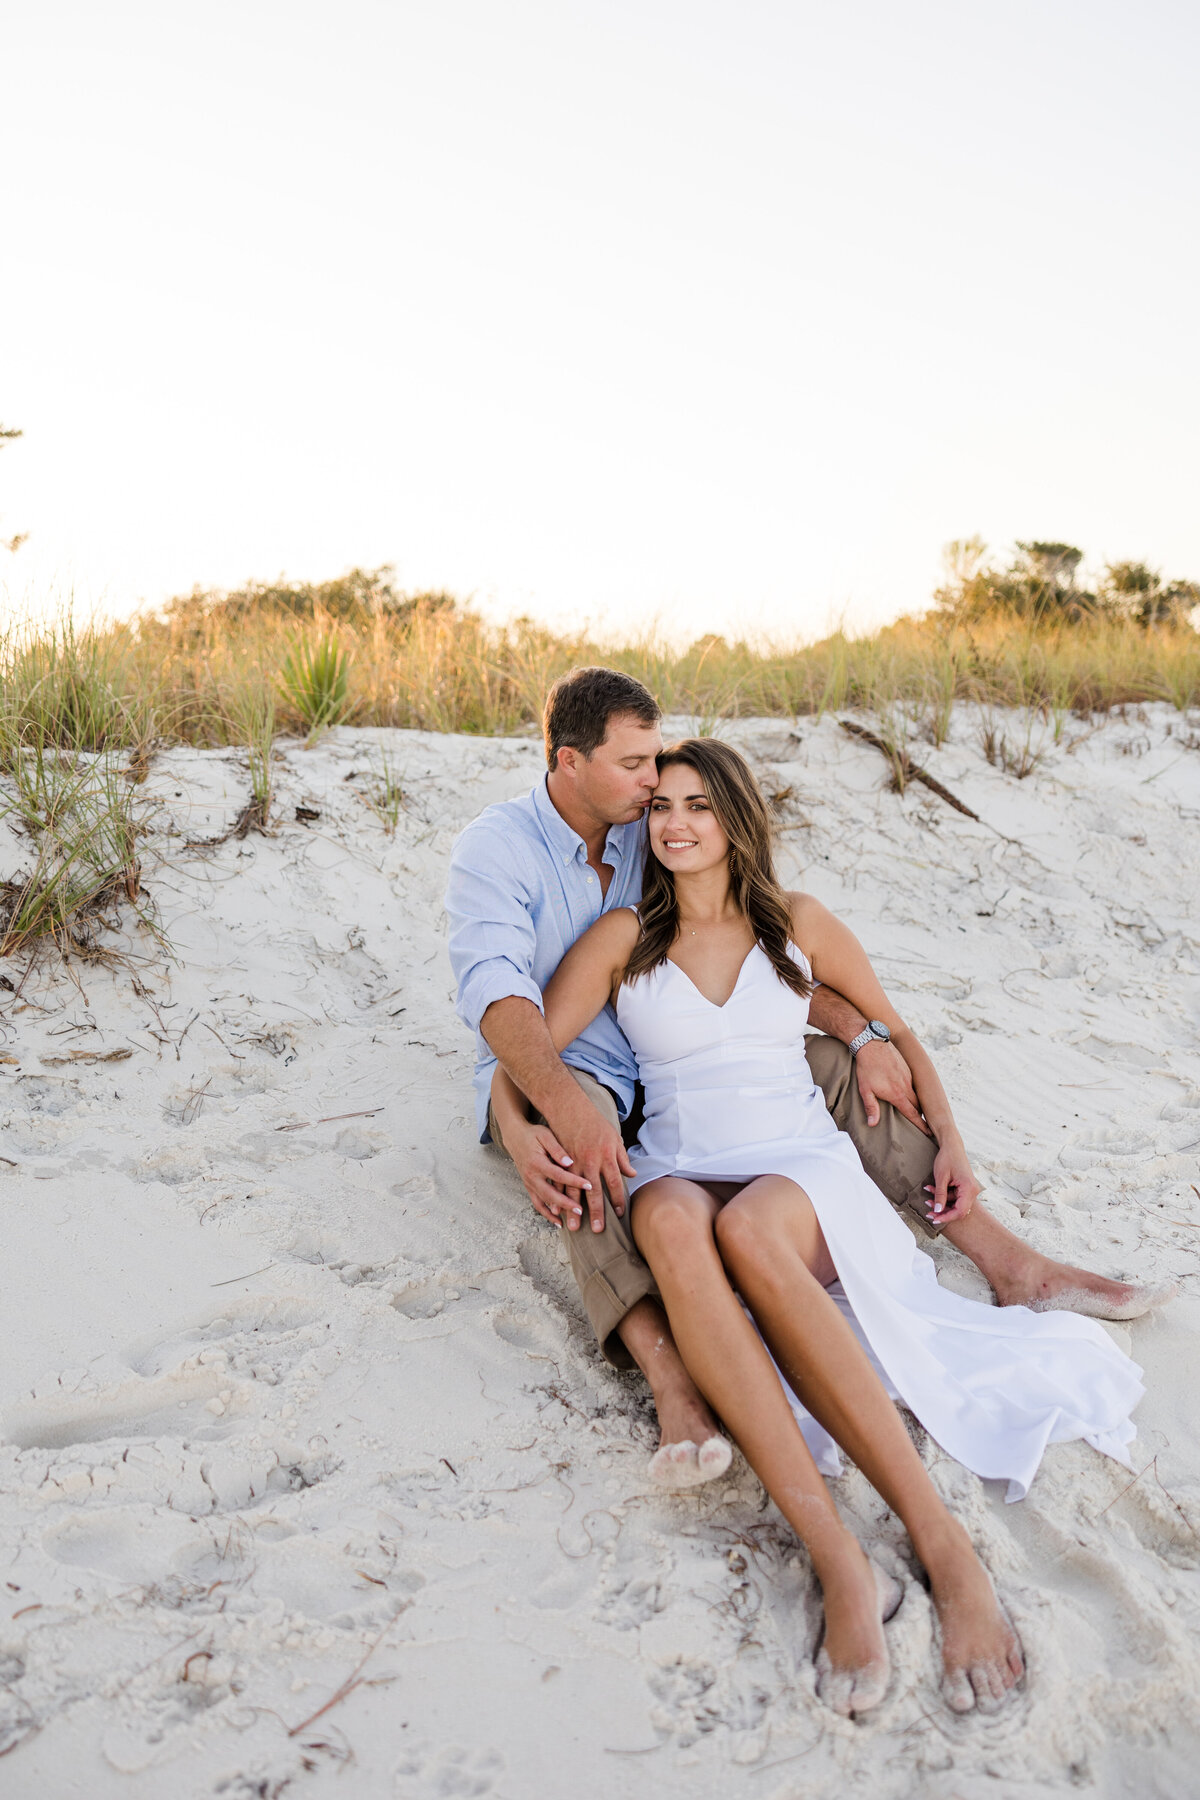 Taylor & Matt Engagement Session - Taylor'd Southern Events - Florida Wedding Photographer -8205